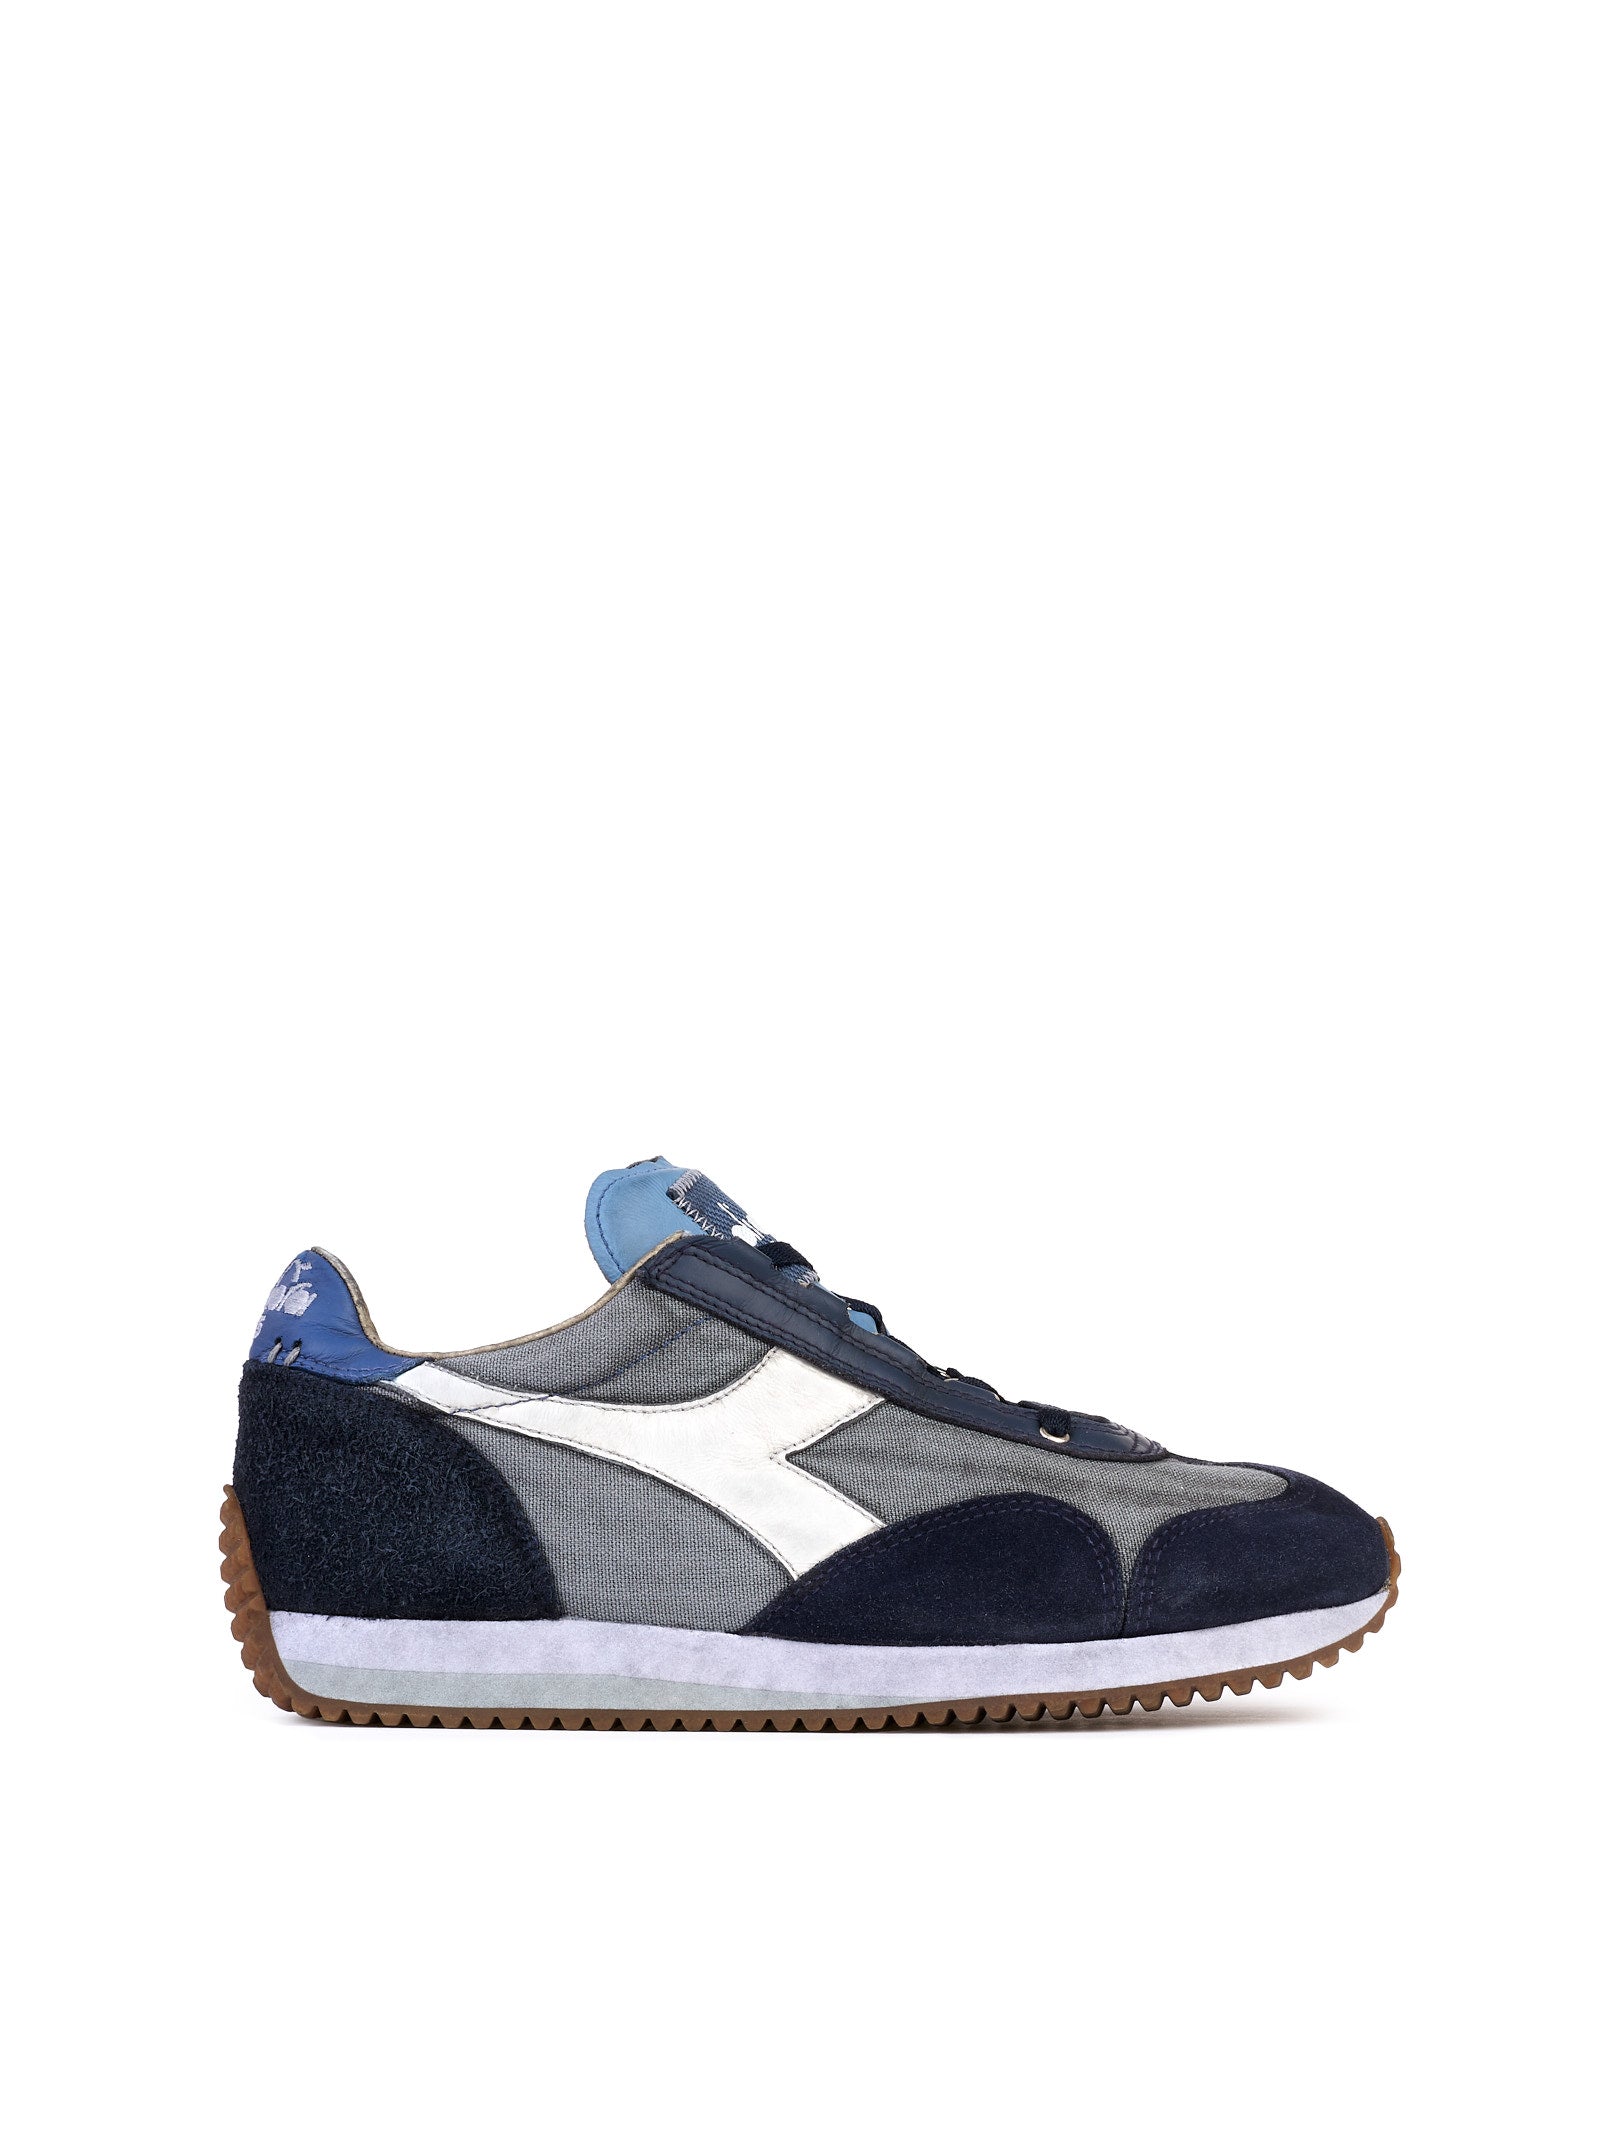 Sneaker DIADORA Equipe dirty stone wash
Blu